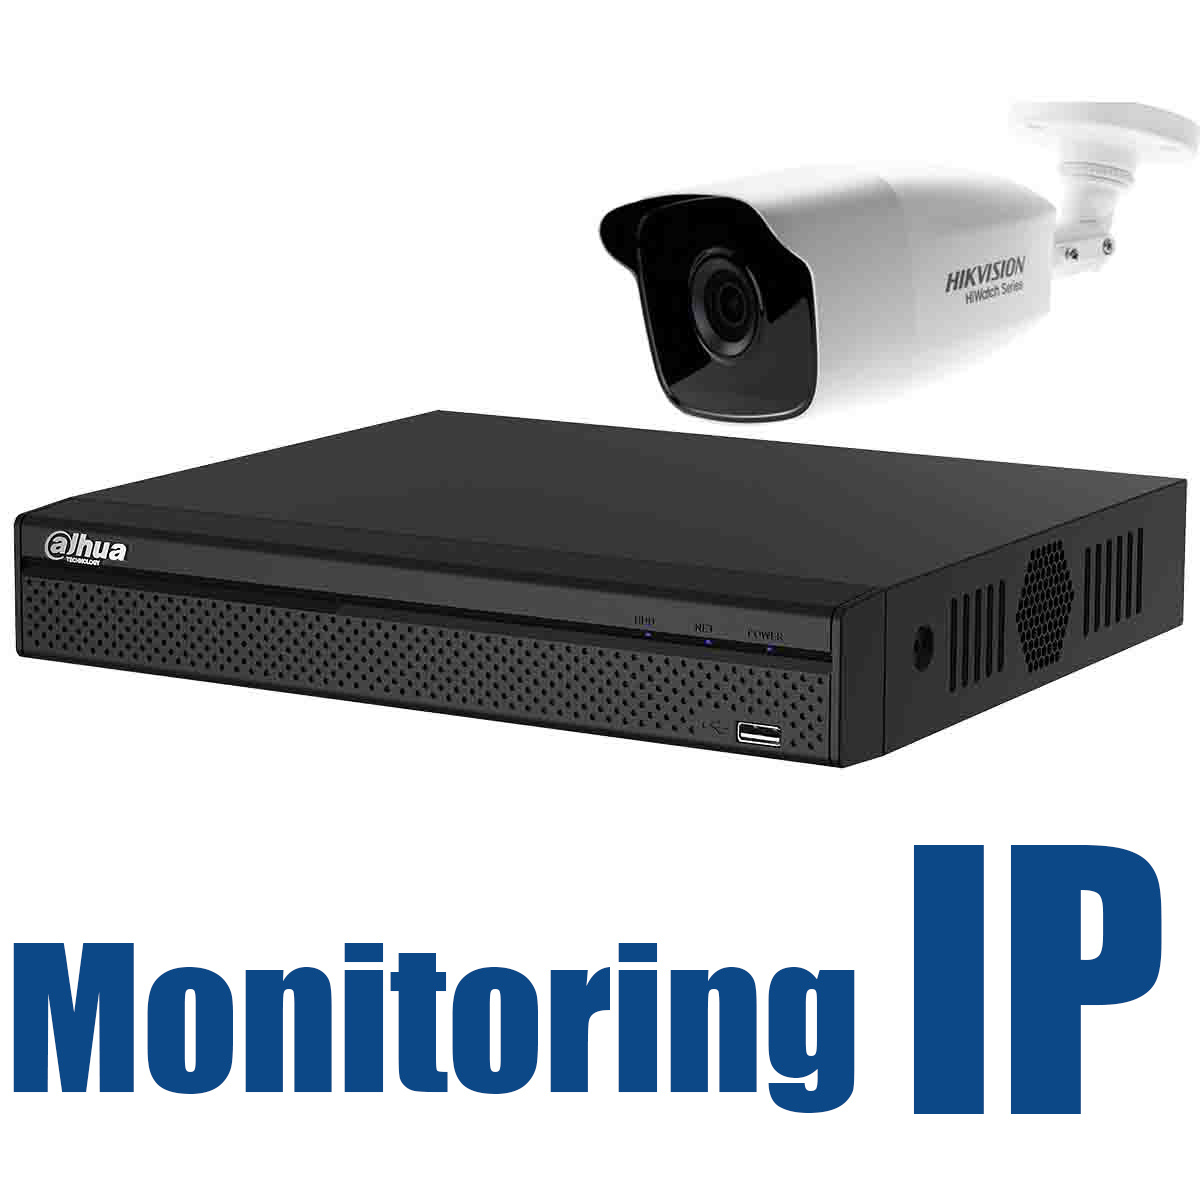 Monitoring IP / WiFi